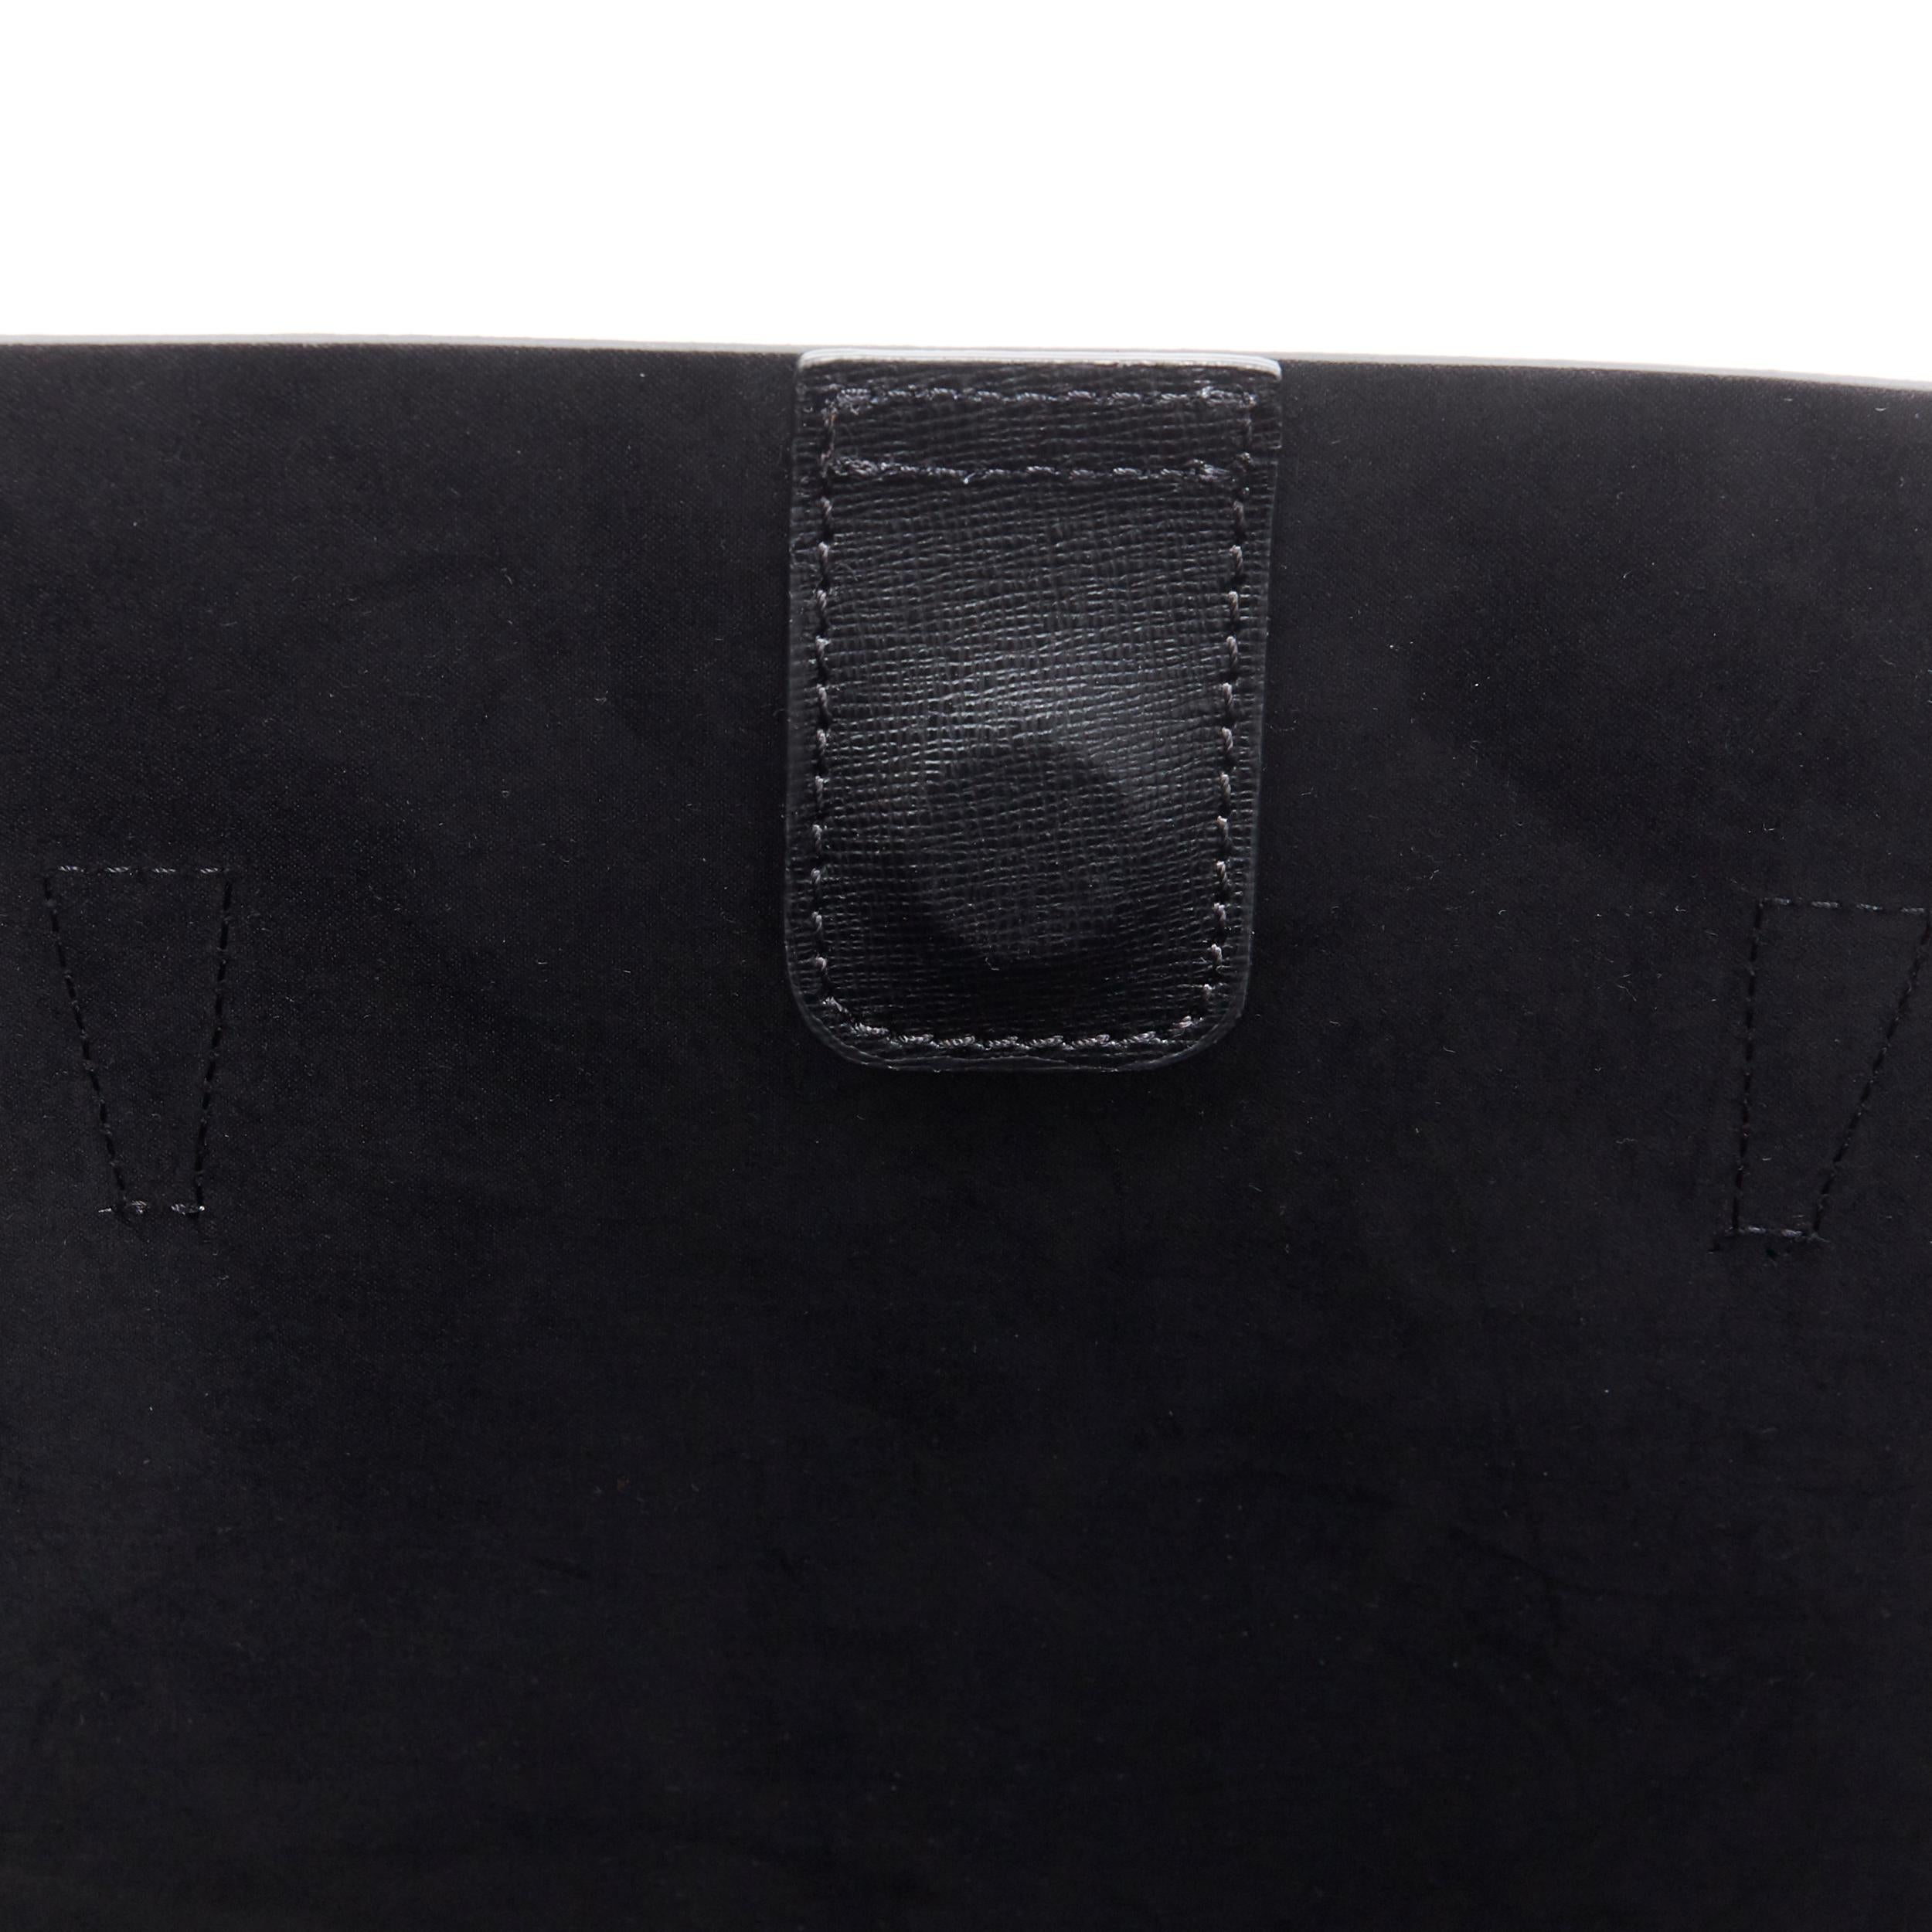 new VERSACE Palazzo Medusa black calf saffiano leather large neverfull tote bag 2